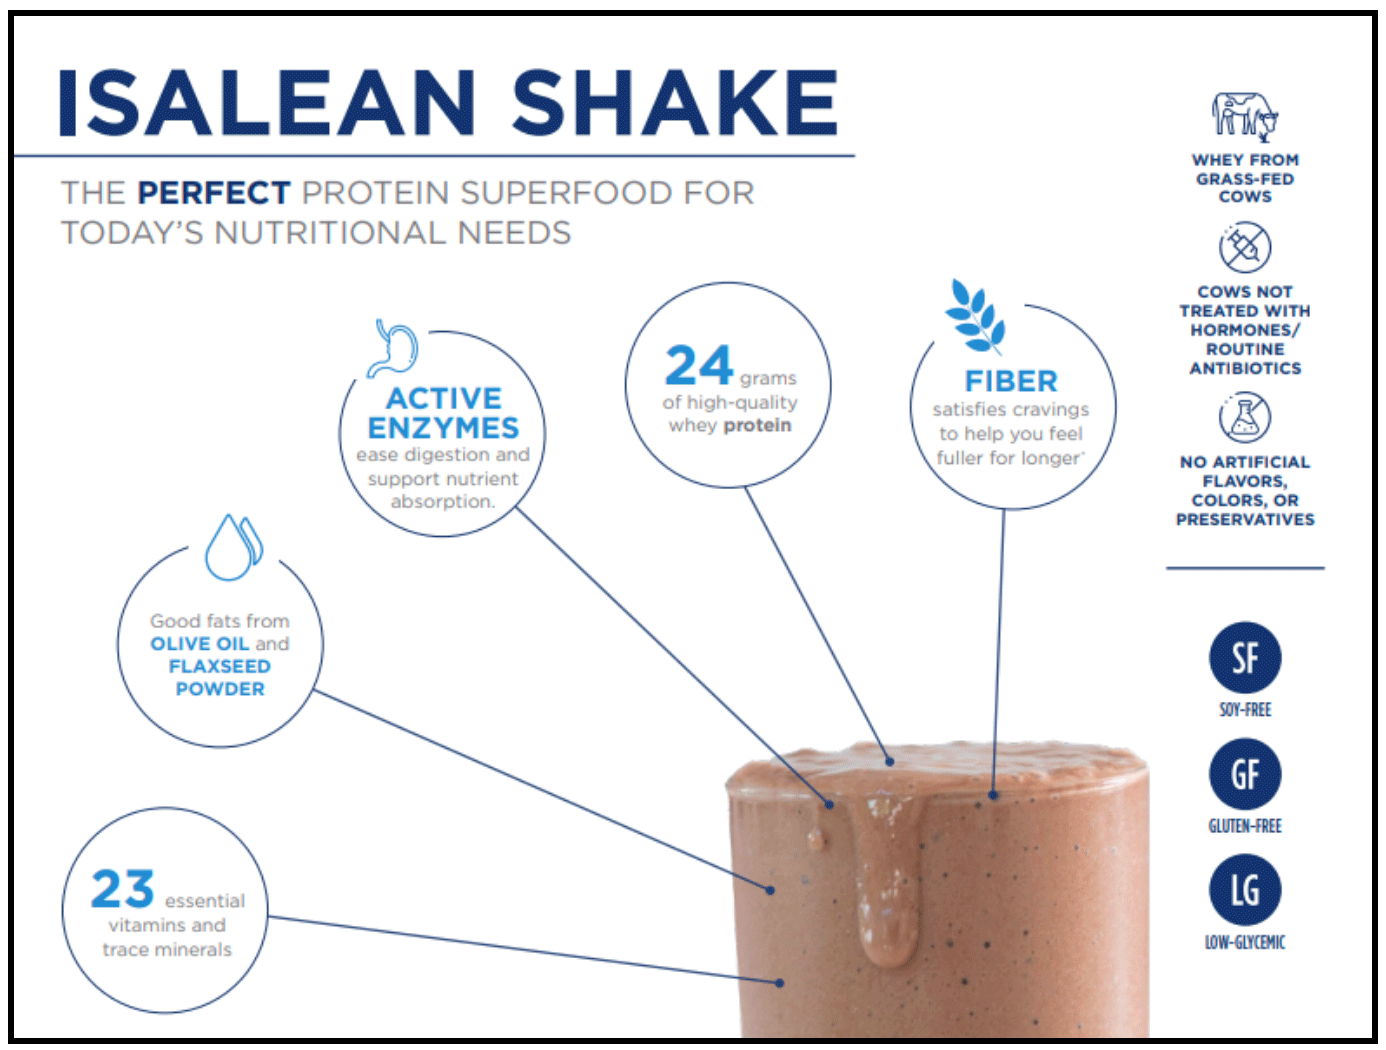 Product Spotlight: Isalean Shake